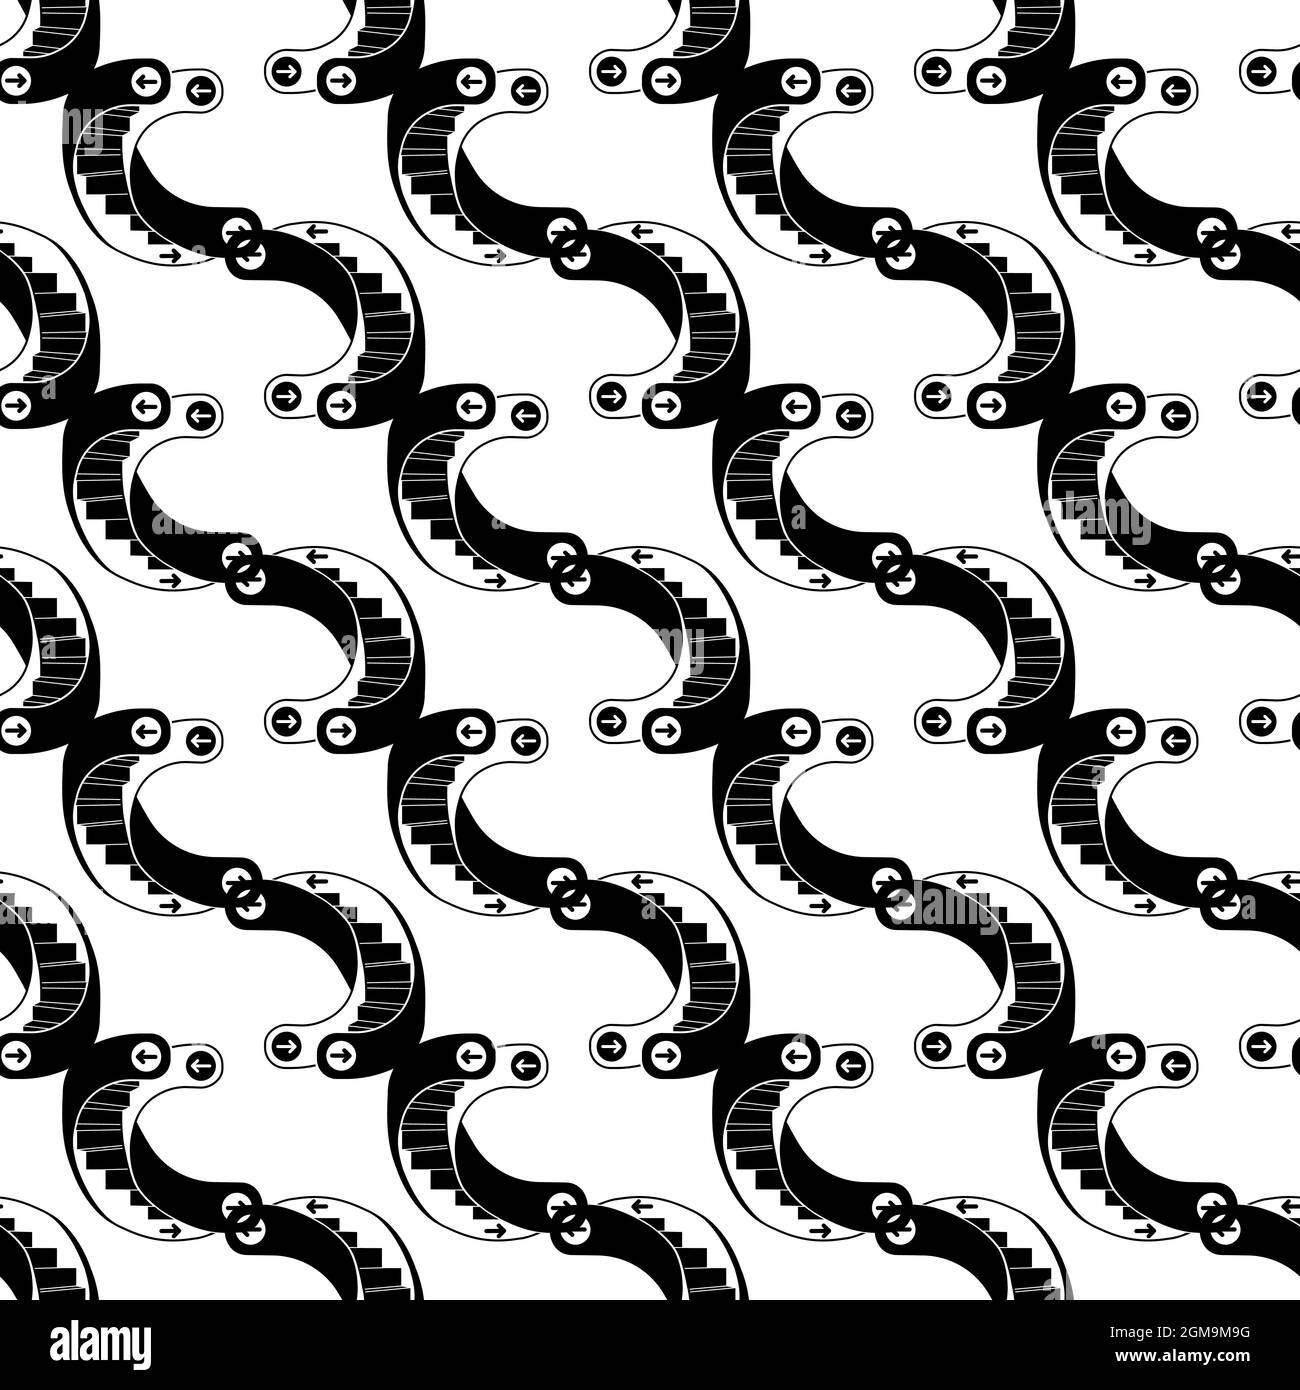 Curve escalator pattern seamless background texture repeat wallpaper geometric vector Stock Vector